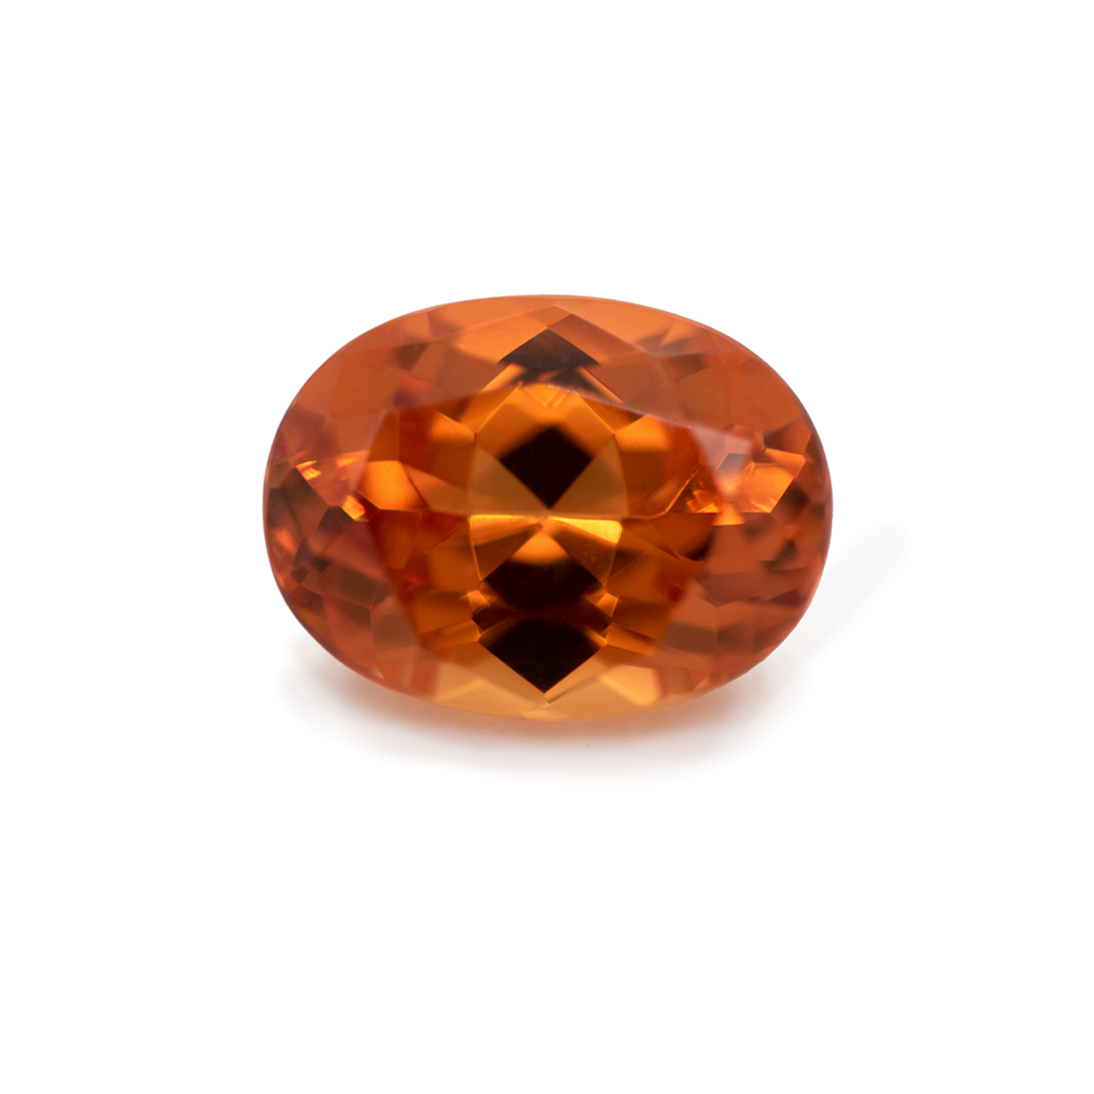 Mandarin Garnet - orange, oval, 8x6 mm, 1.72 cts, No. MG20002